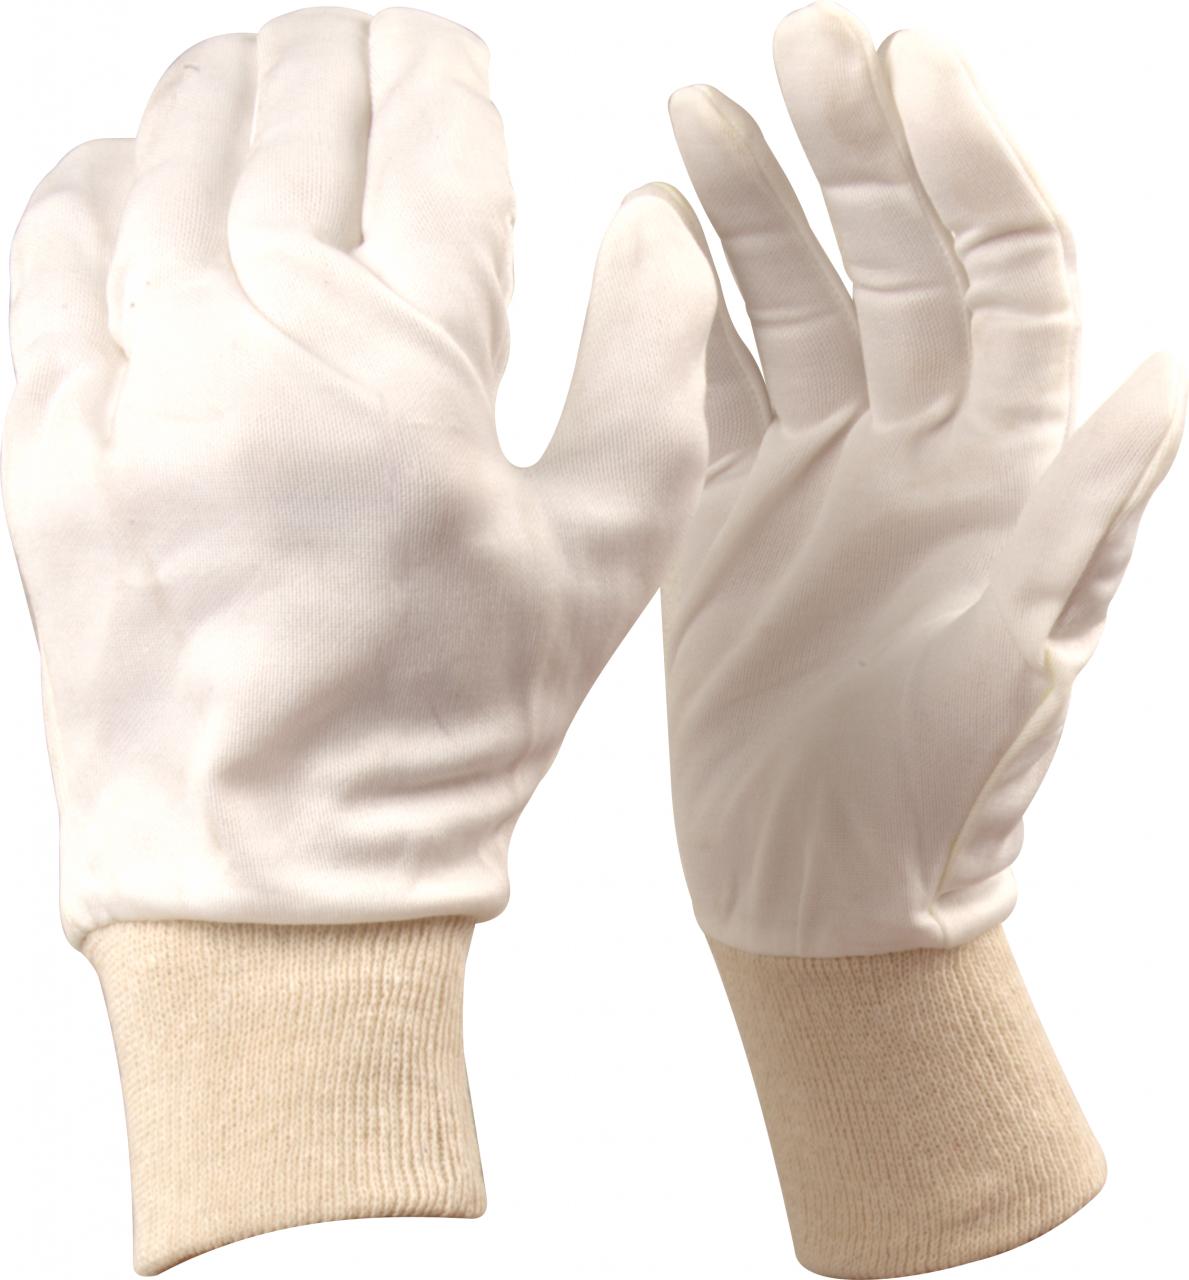 Glove Un-bleached Cotton Protective Gloves Liner